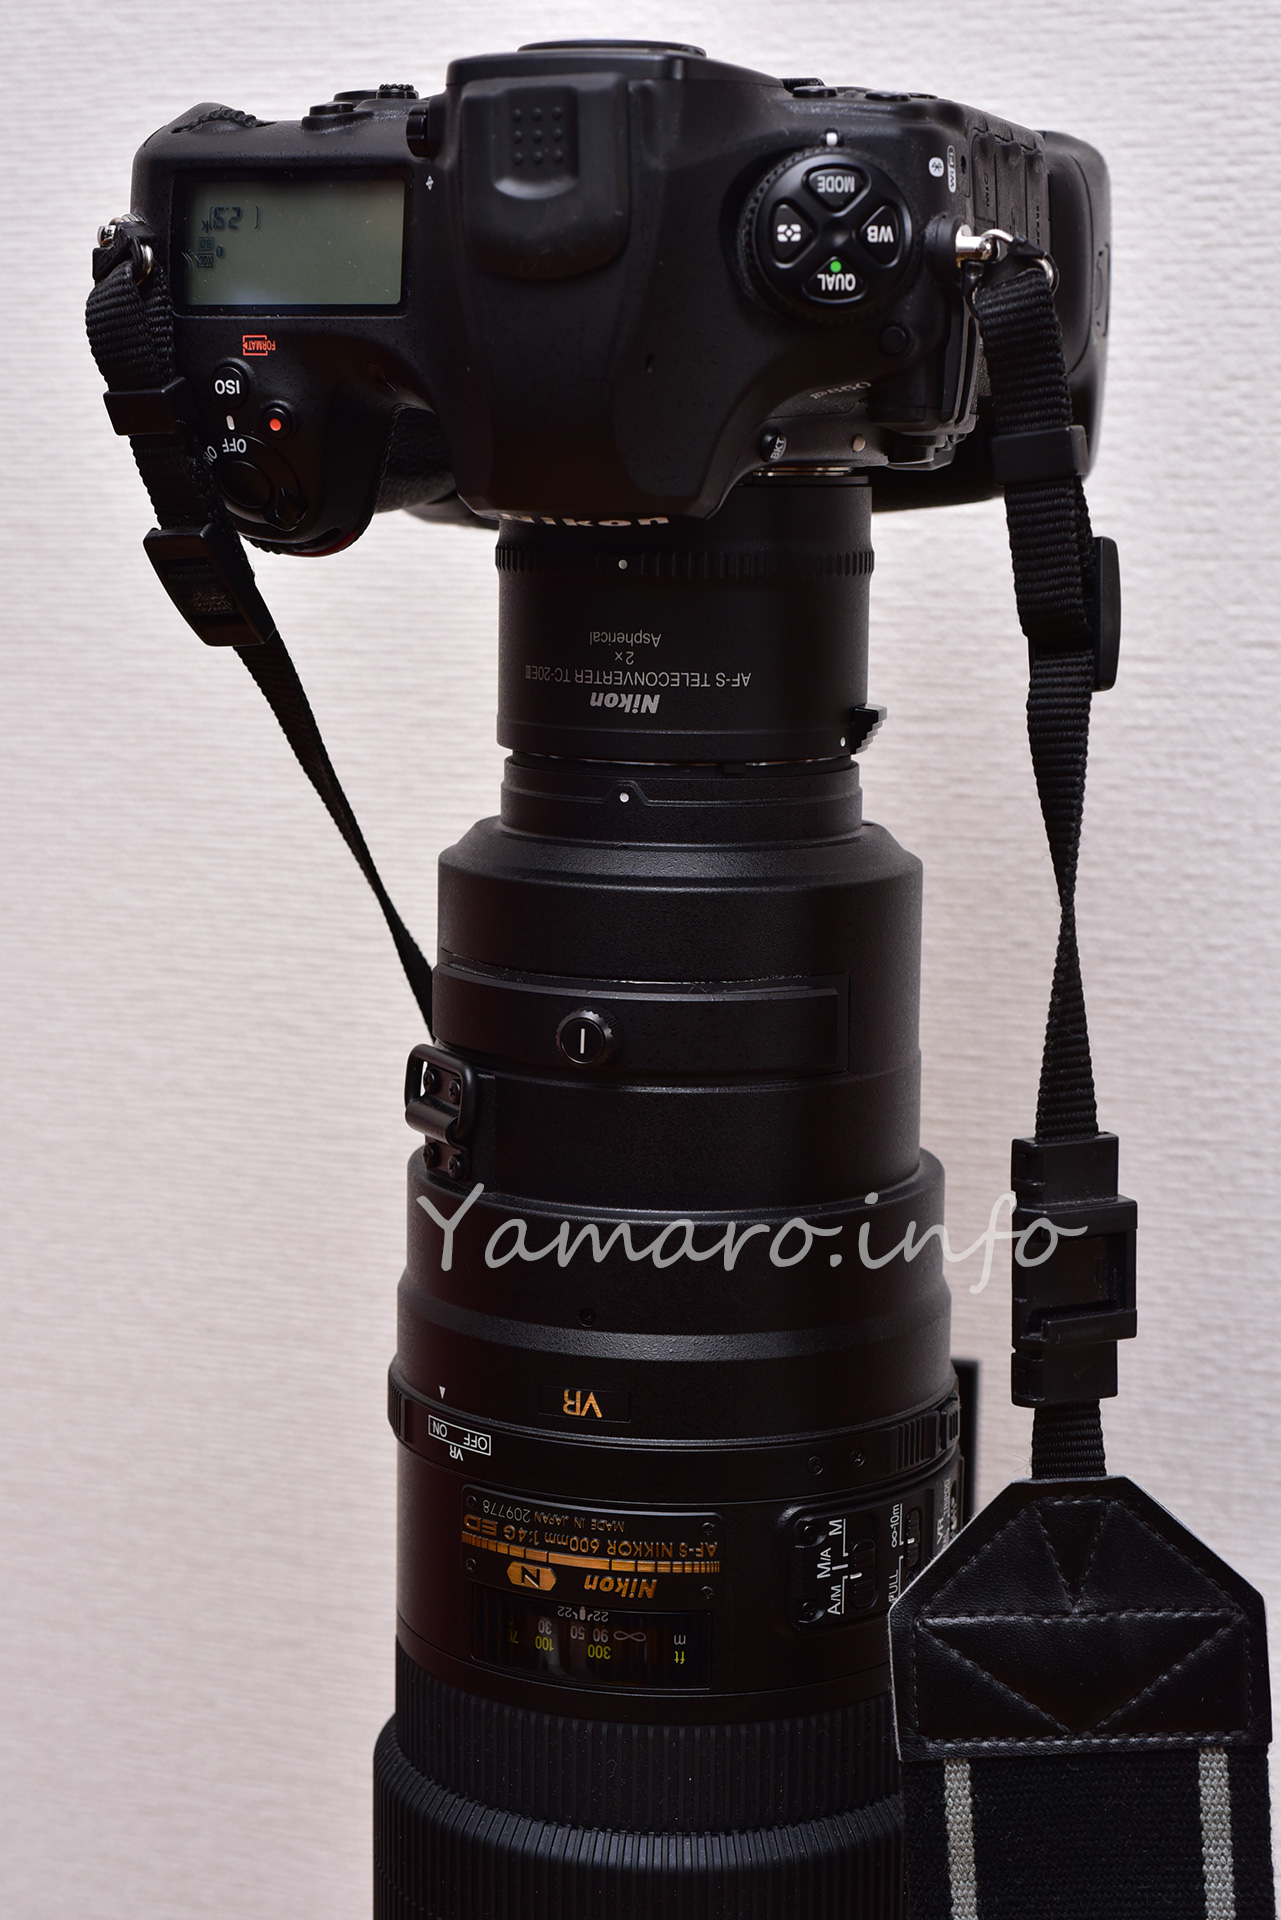 Nikon TC-20EIIIを導入してみた - Blog@yamaro.info